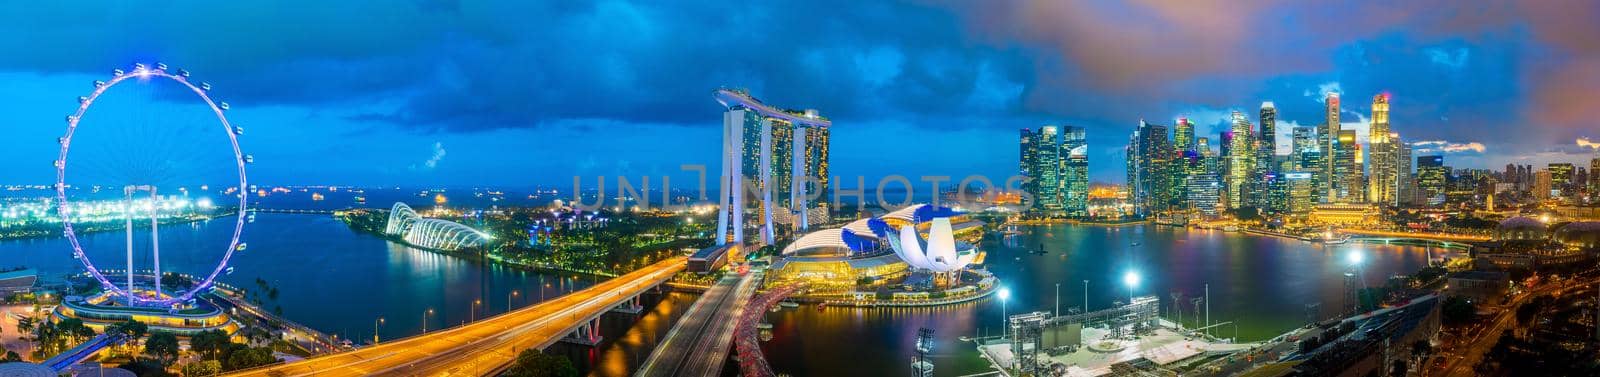 Singapore downtown skyline by f11photo